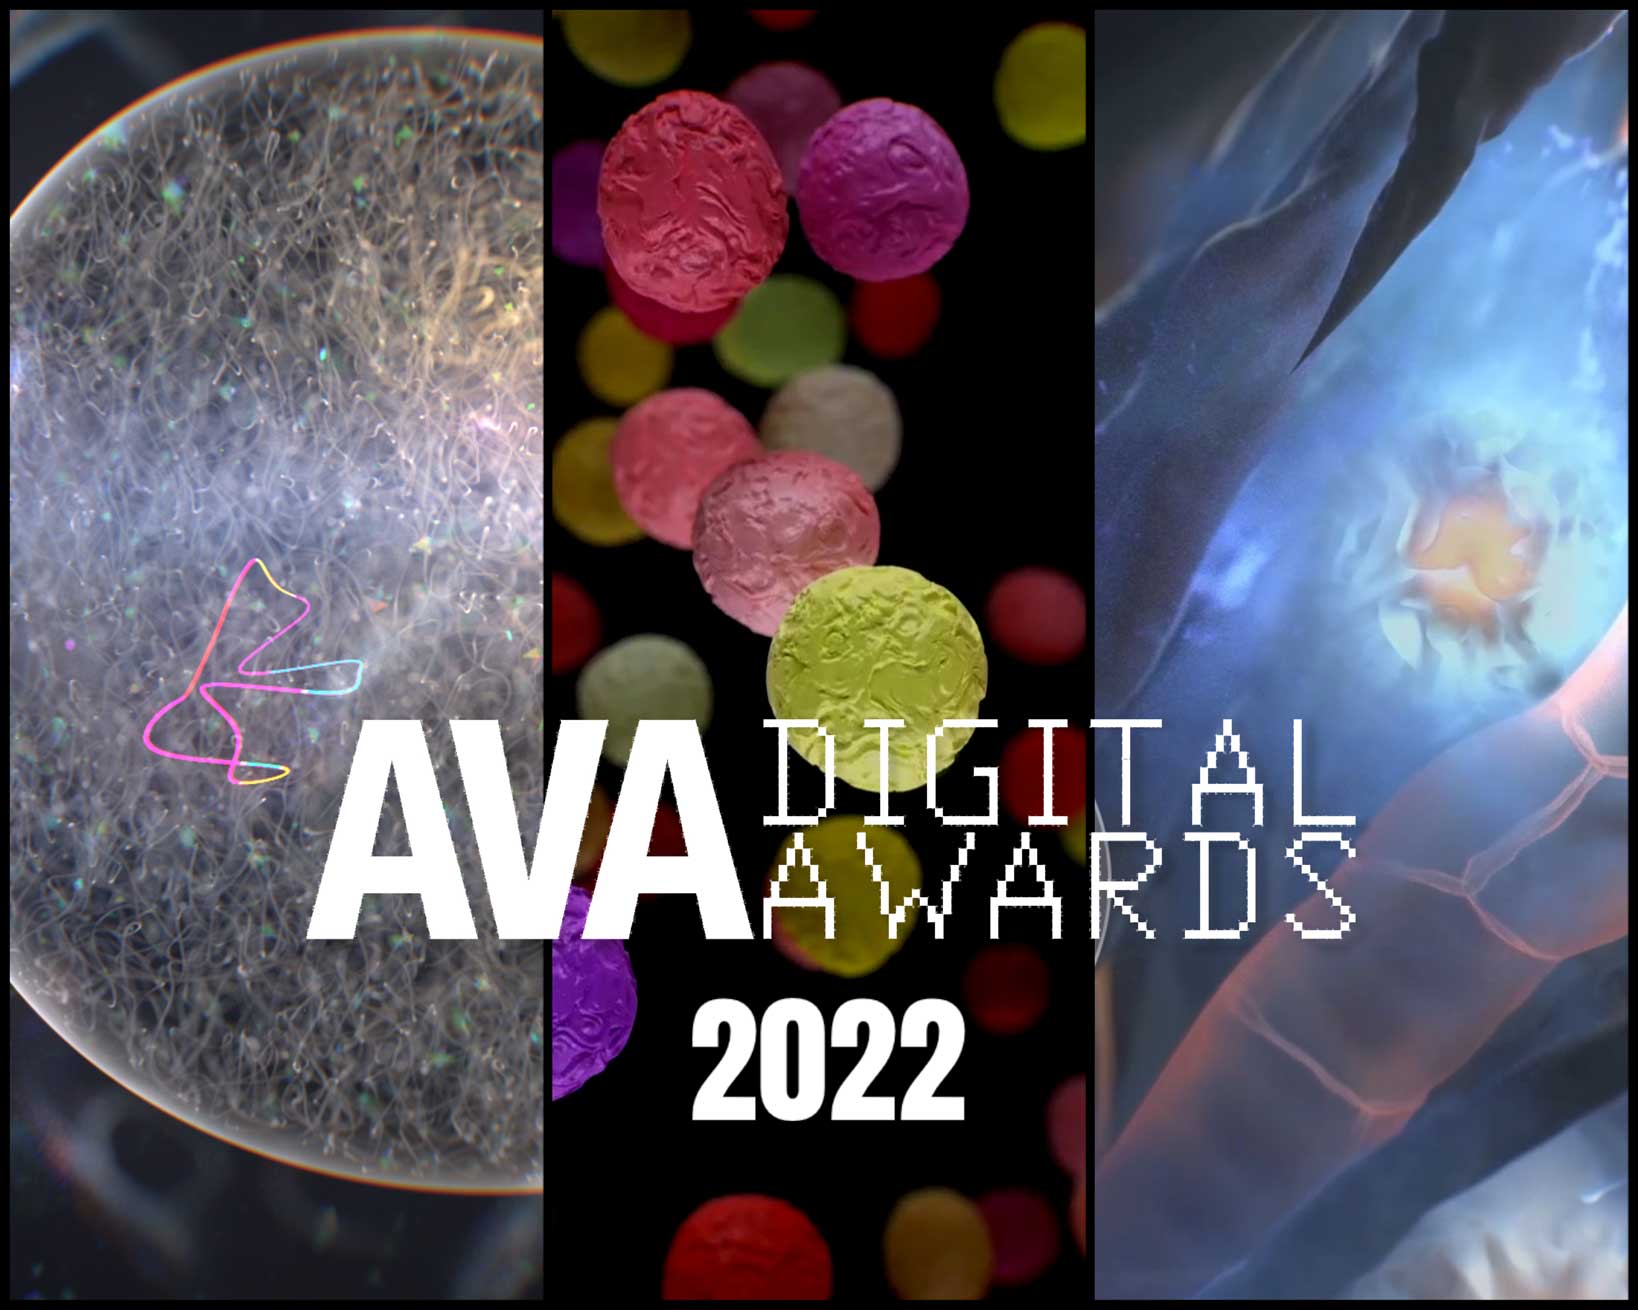 Ava-Digital-Awards-Post-2022-Microverse-Studios-Collage